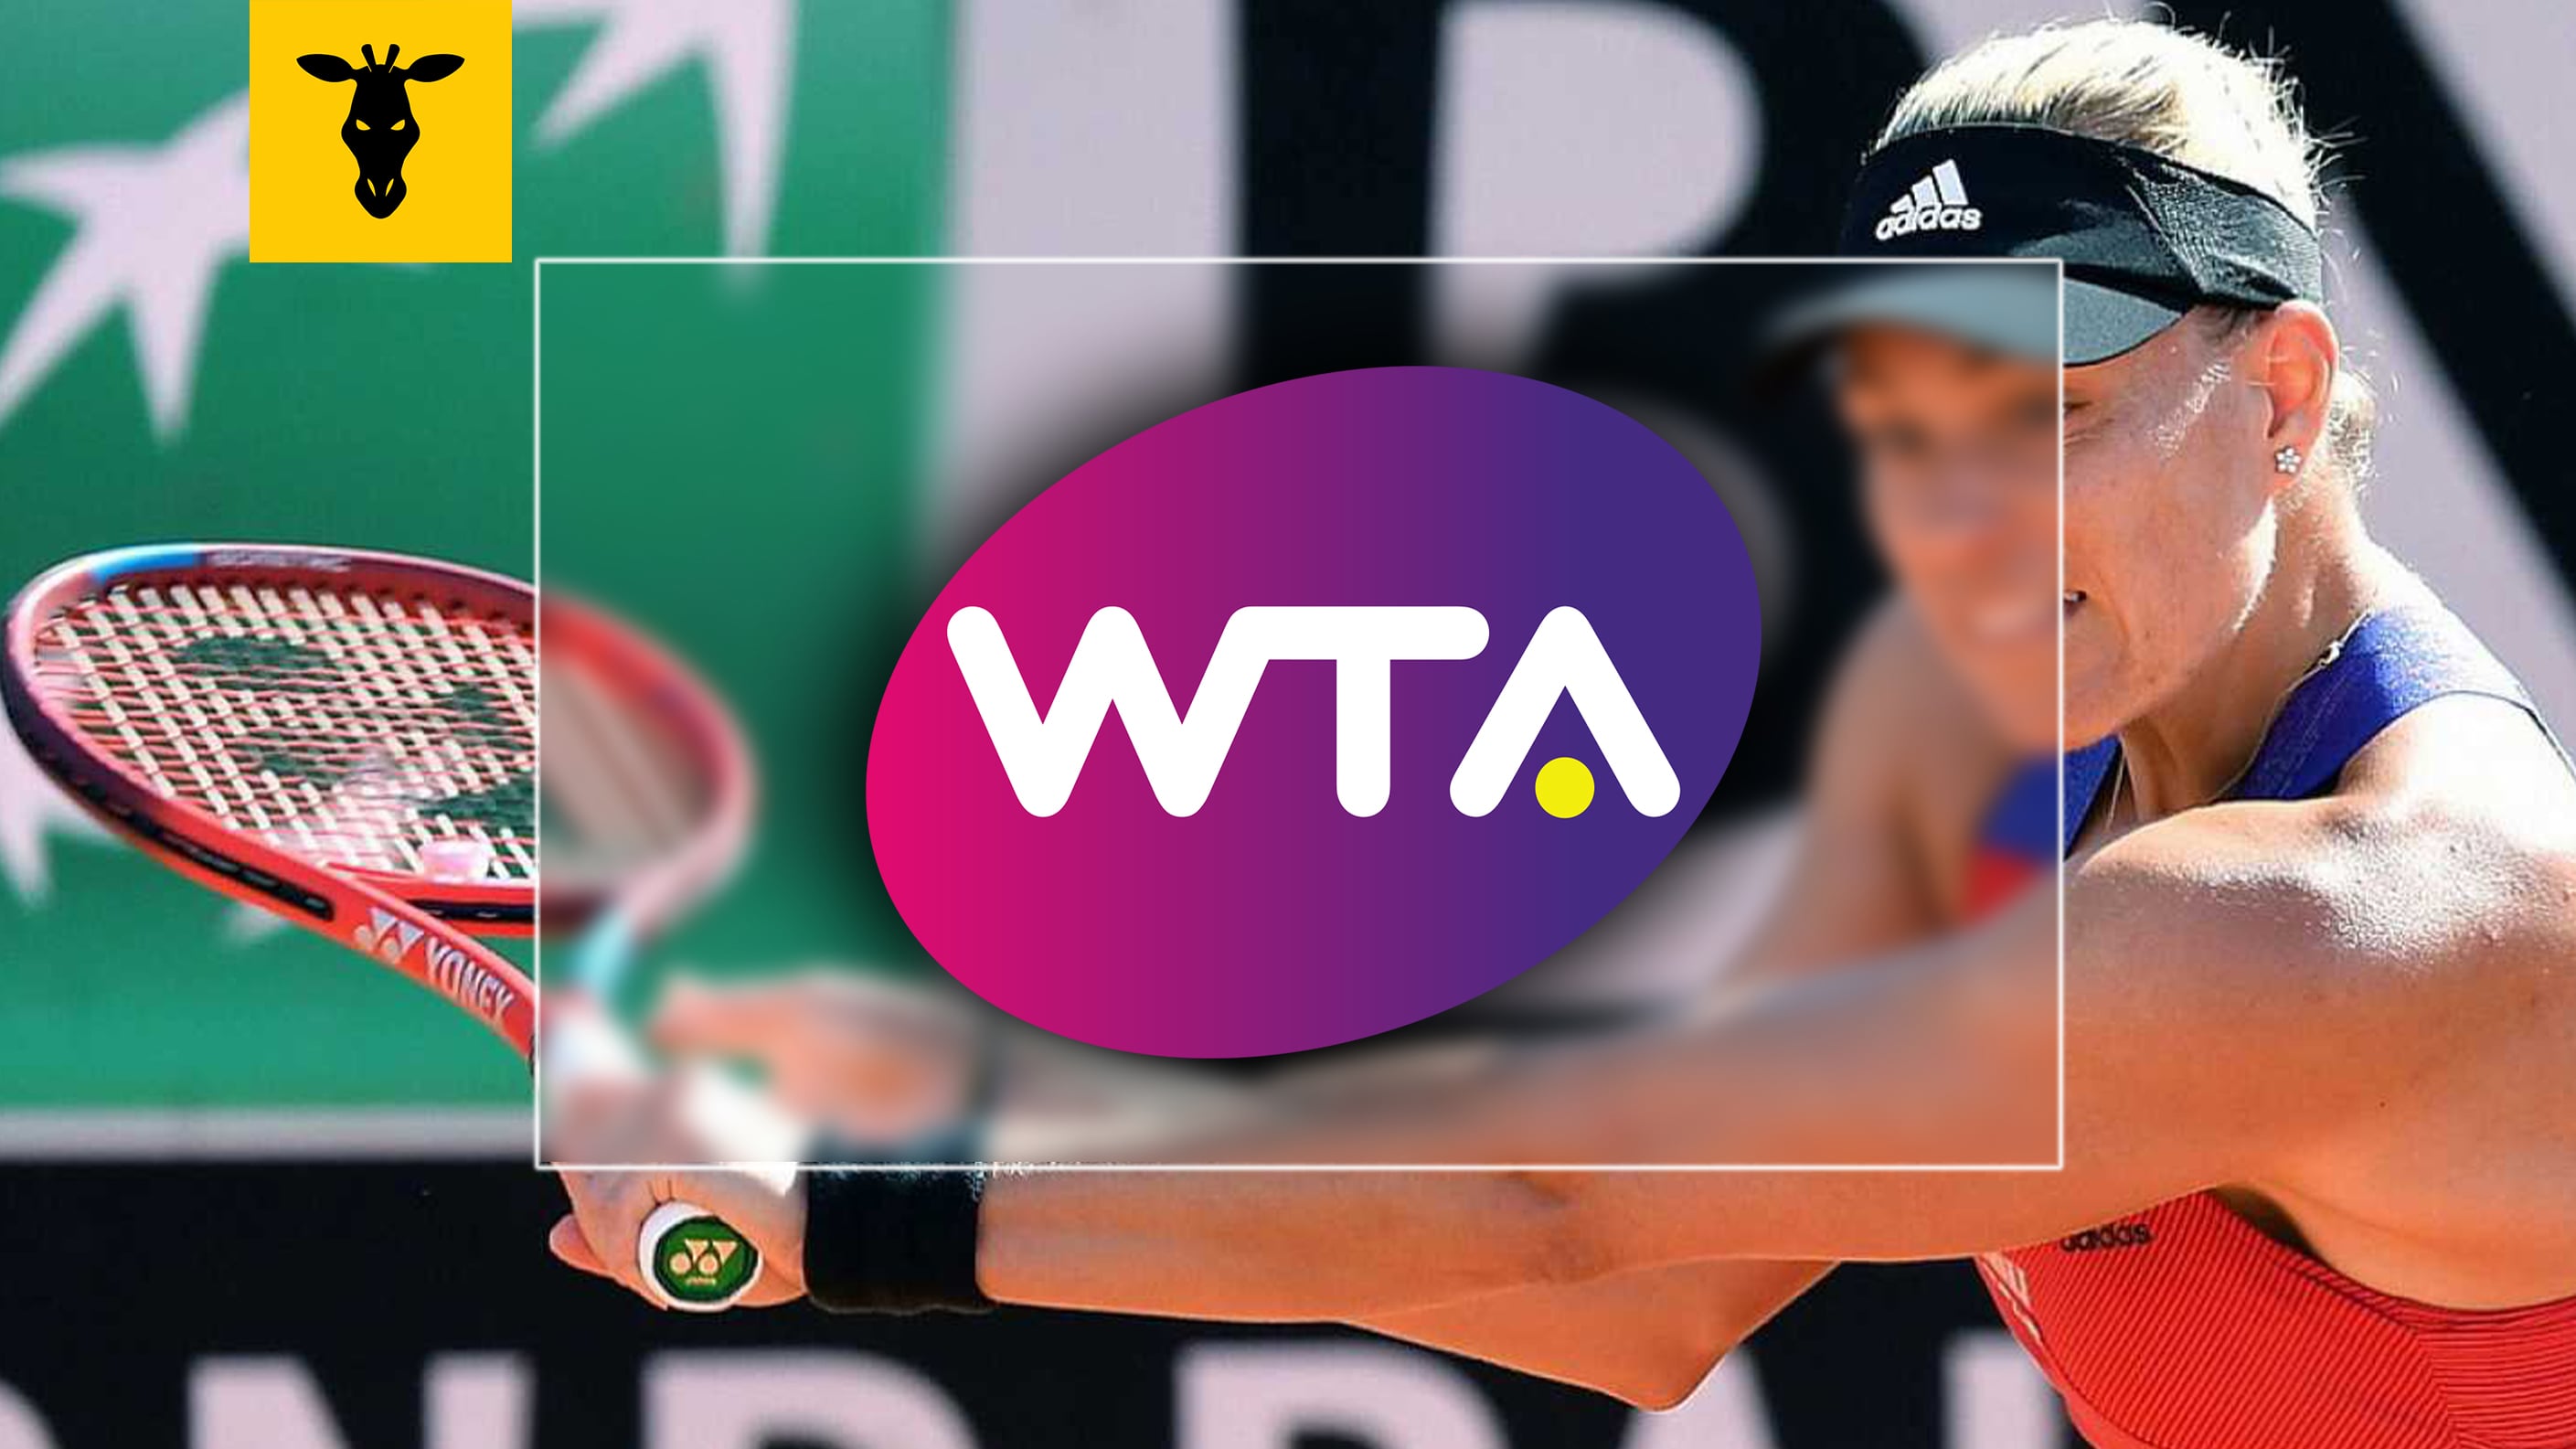 WTA WOMENS TENNIS ASSOCIATION Branding 2020 on Vimeo